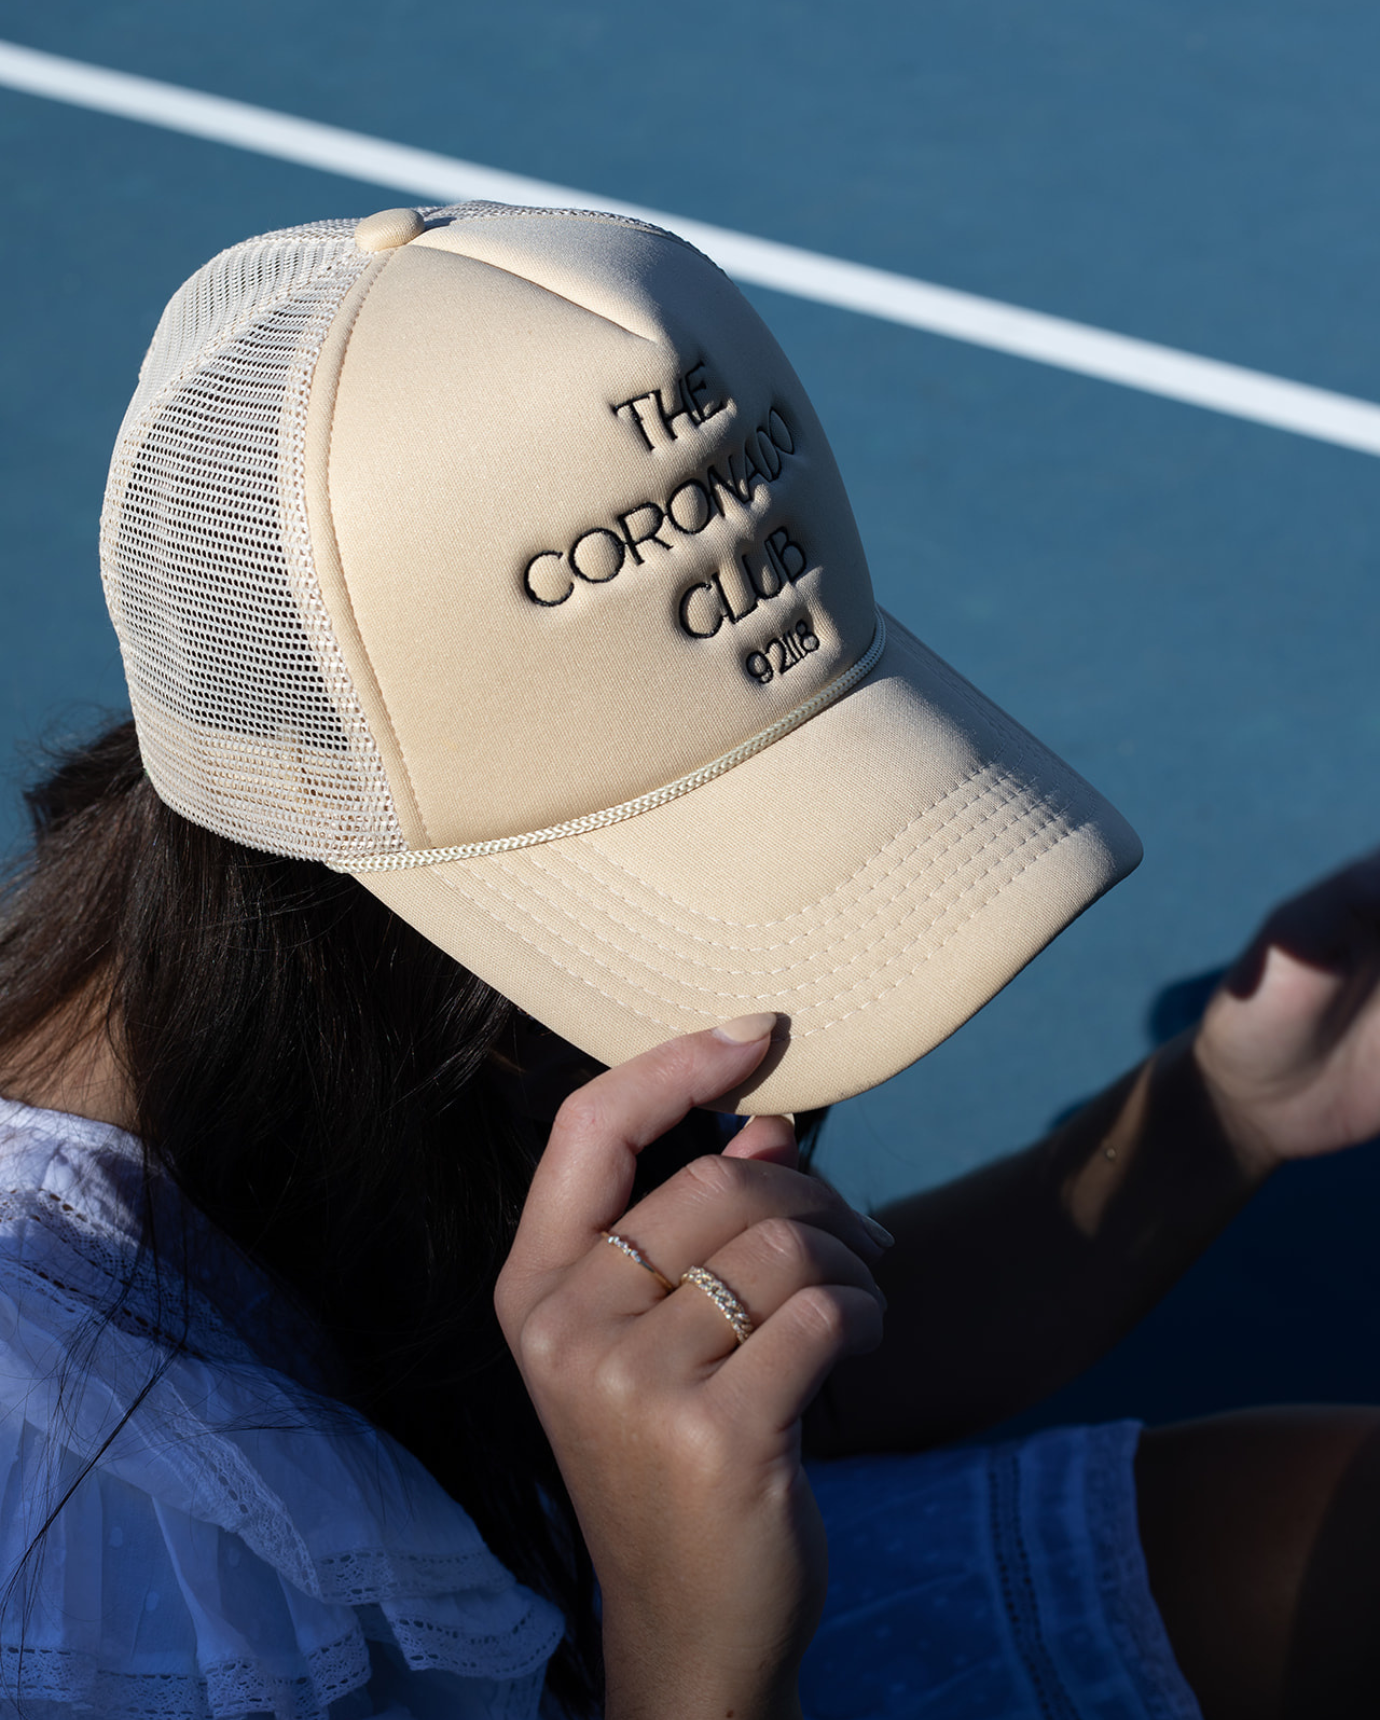 the coronado club trucker hat